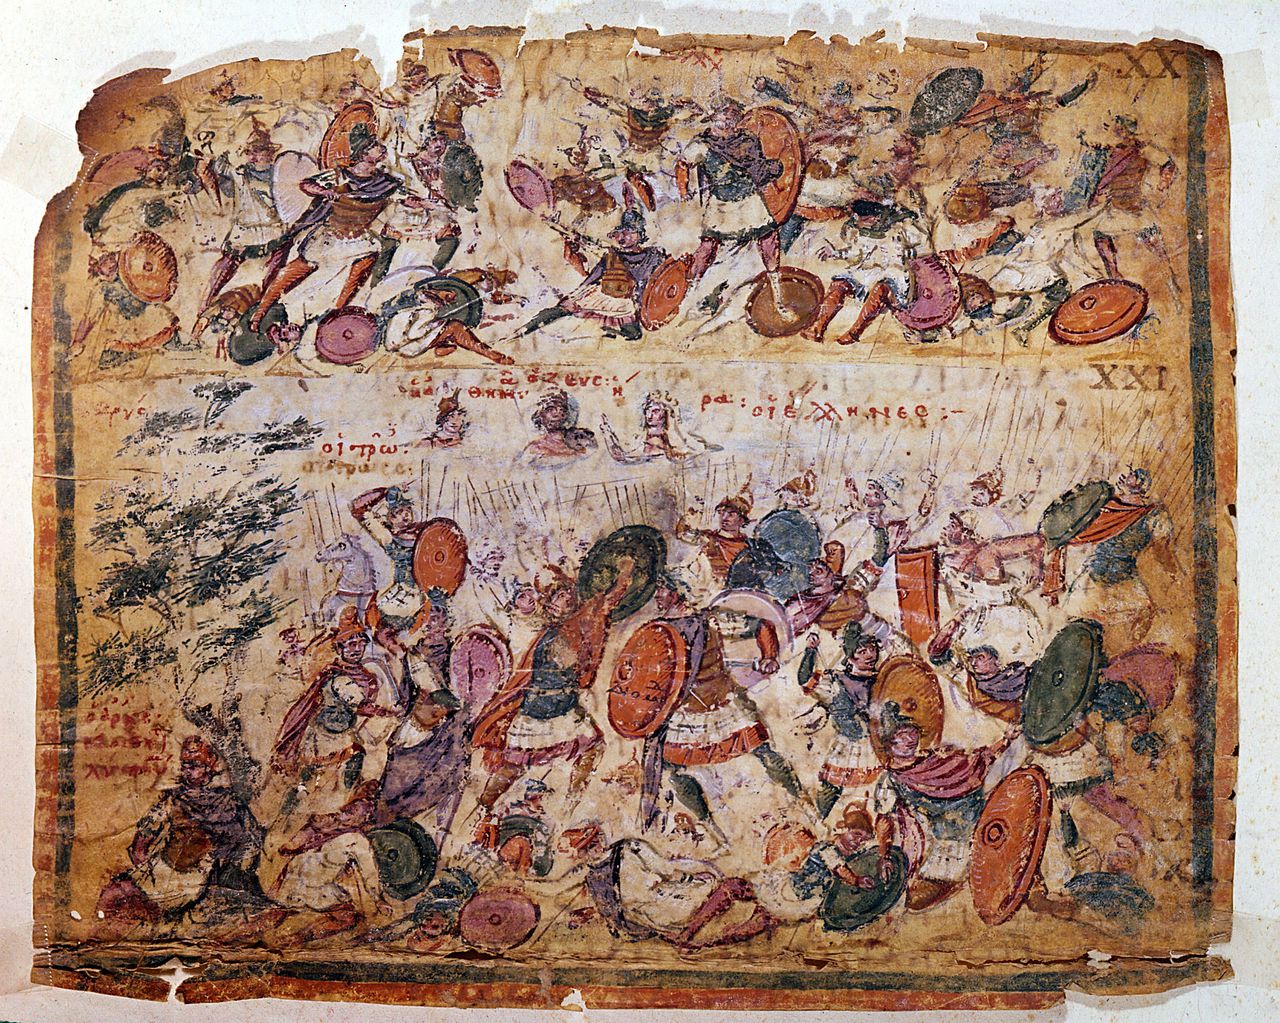 Battle scene from a manuscript of Homer "Iliad" c300 AD Biblioteca Ambrosiana Milan.